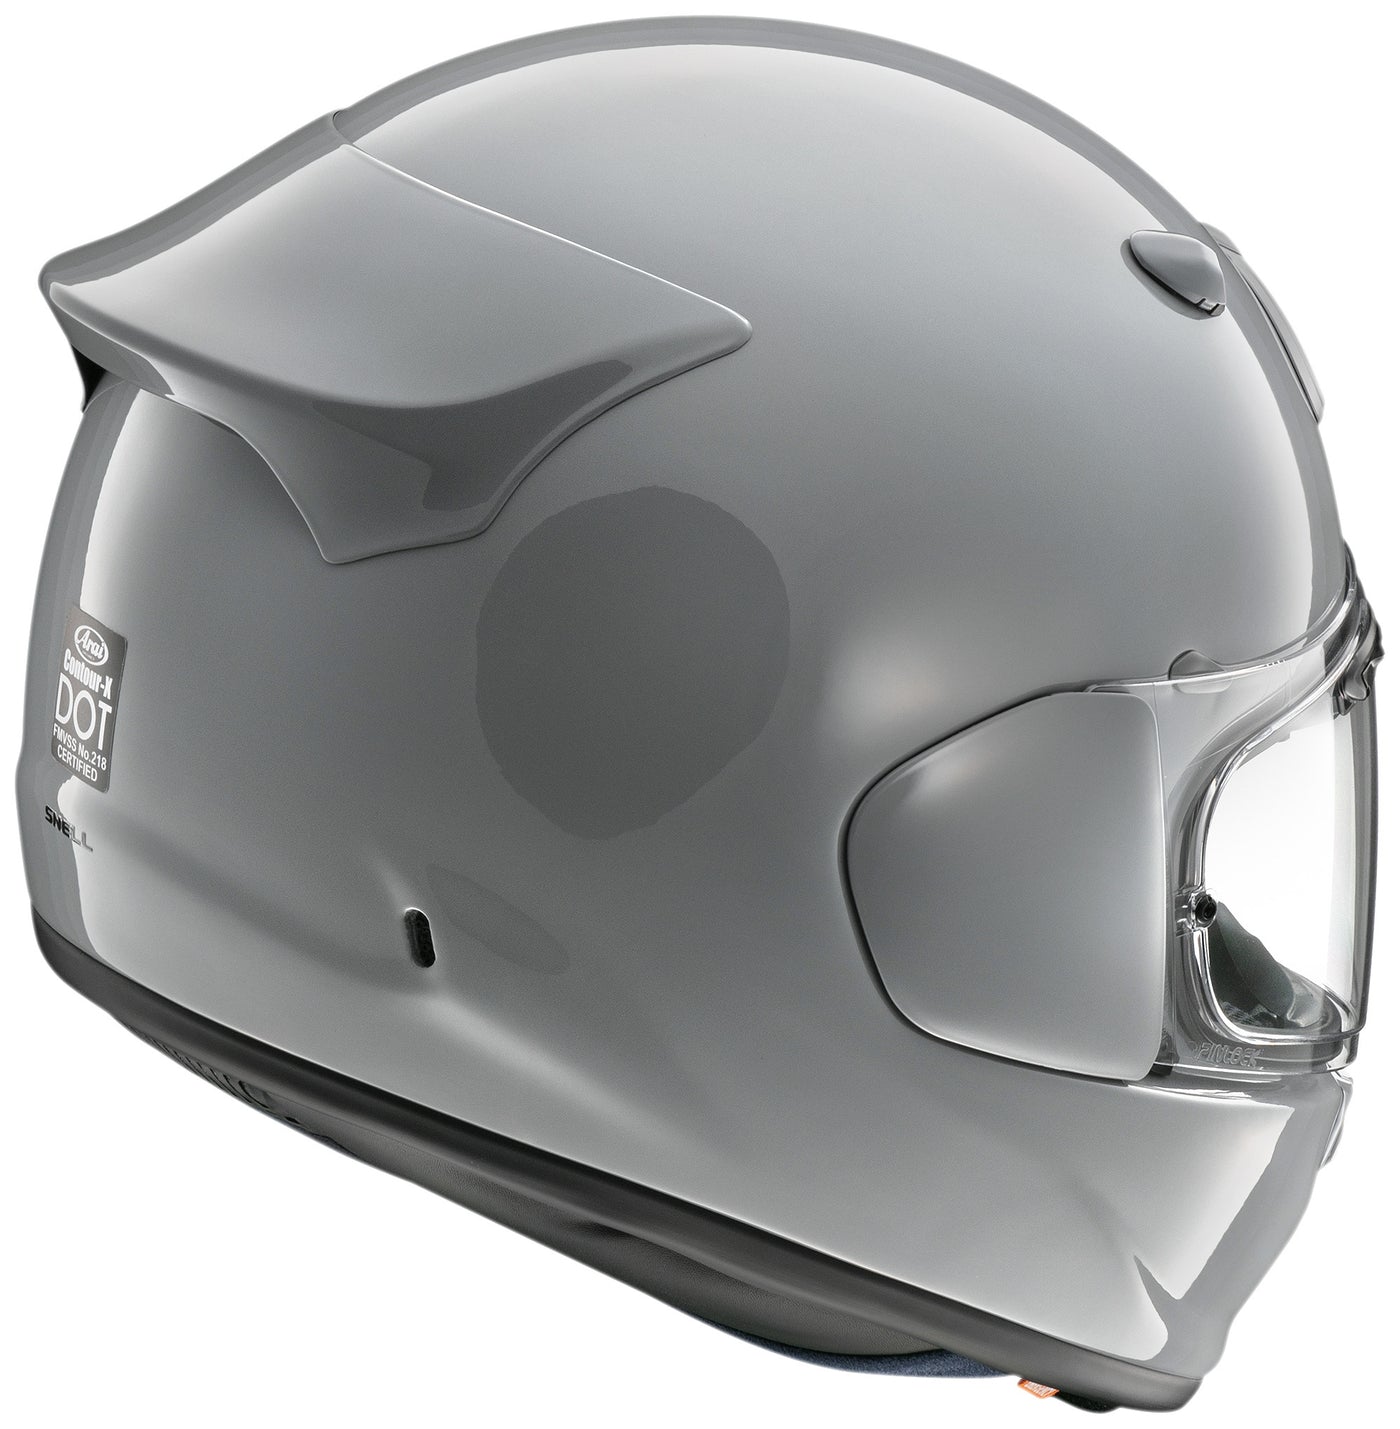 Arai Contour-X Solid Helmet - Light Grey